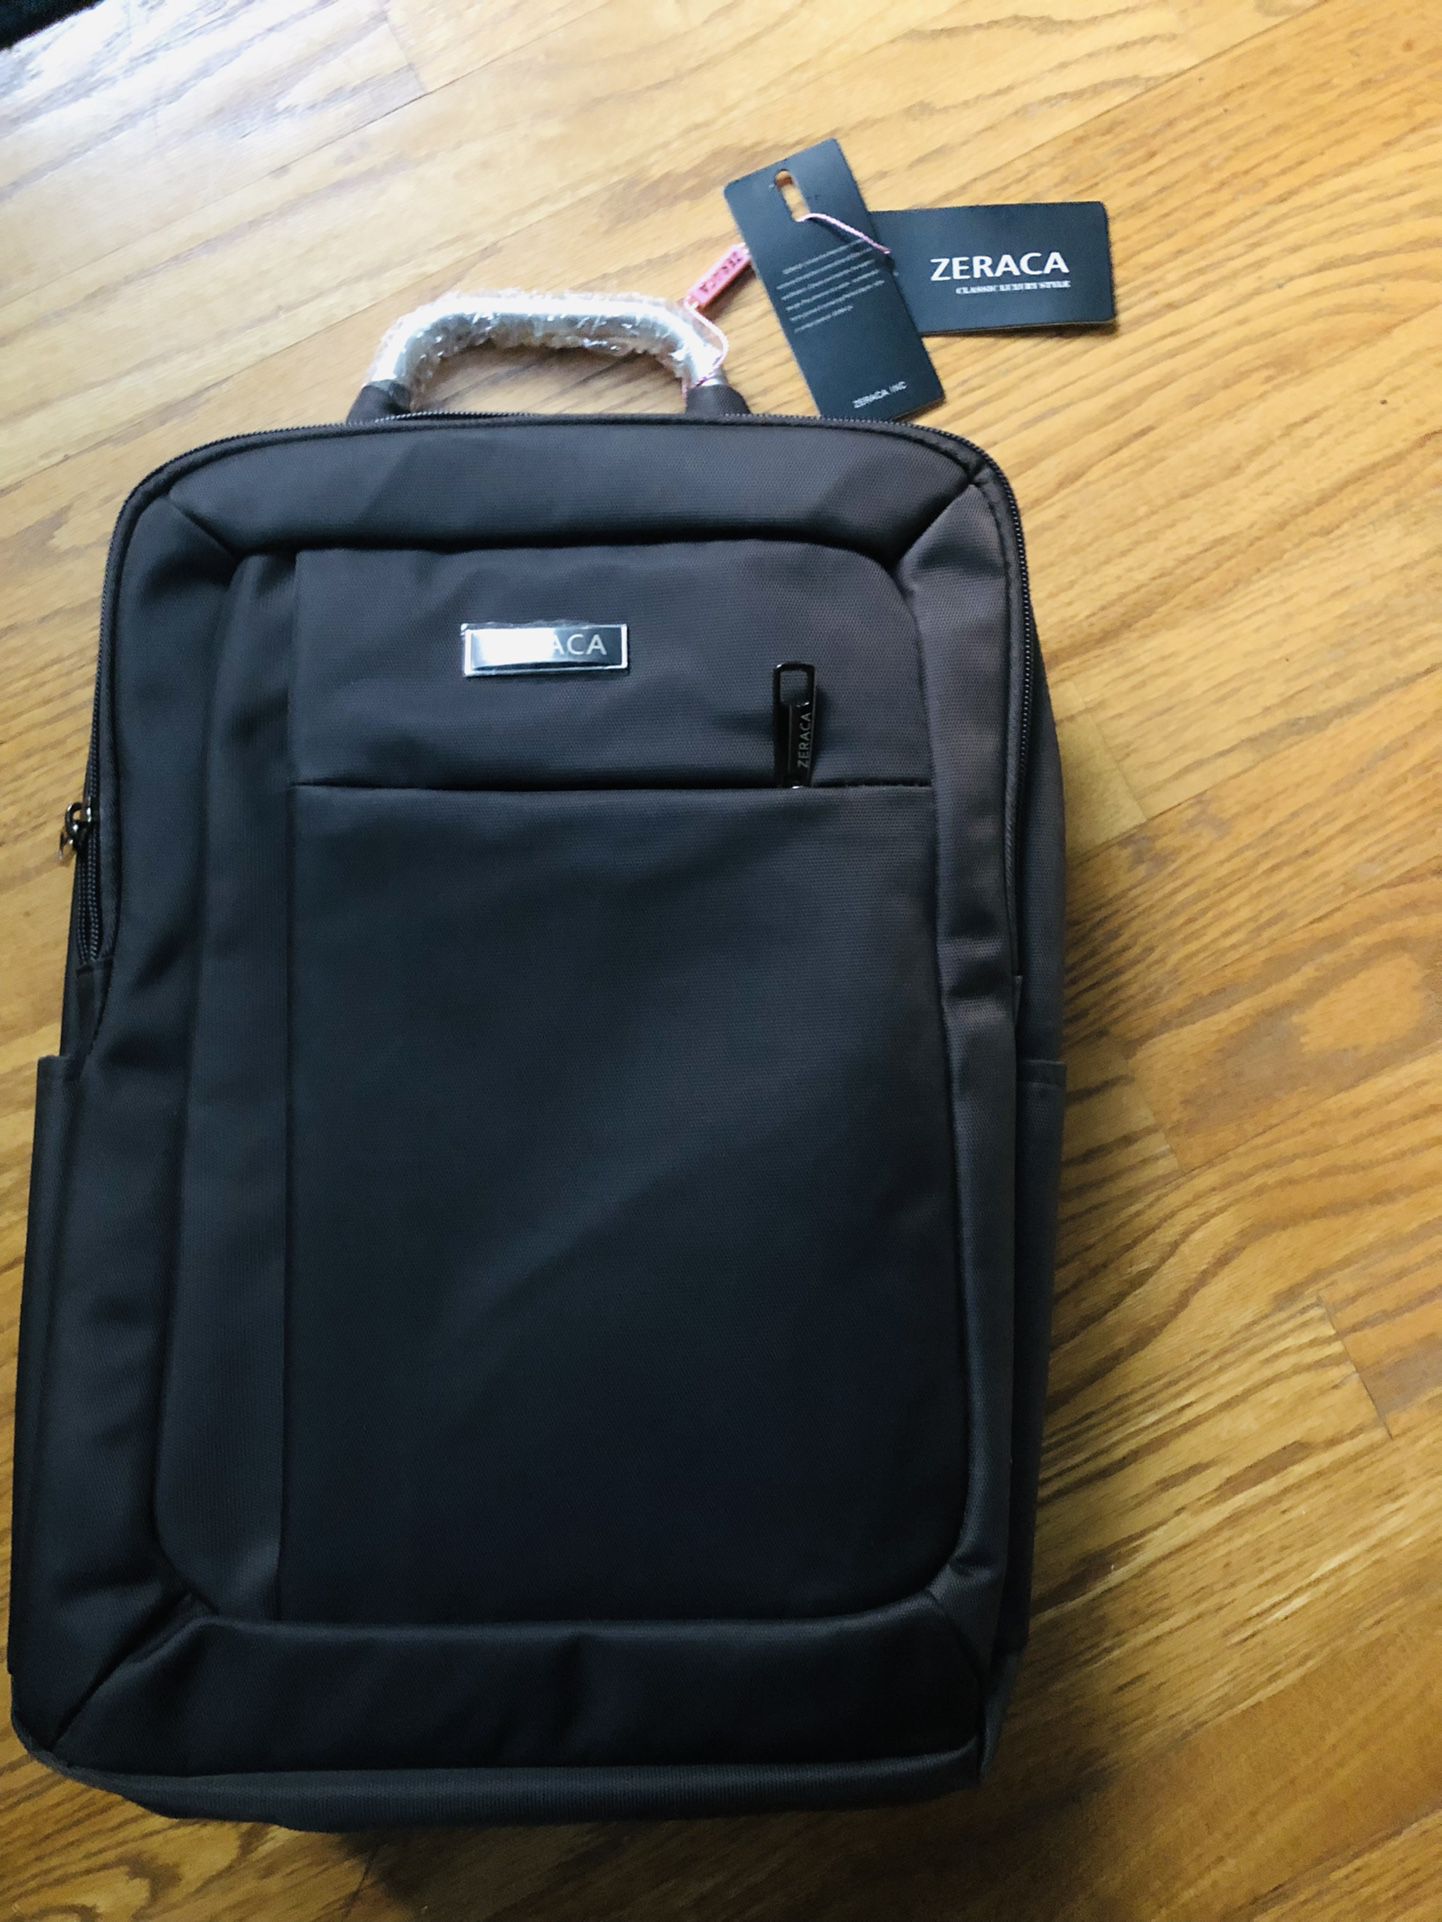 Zeraca Ultra Shakeproof Laptop Backpack 